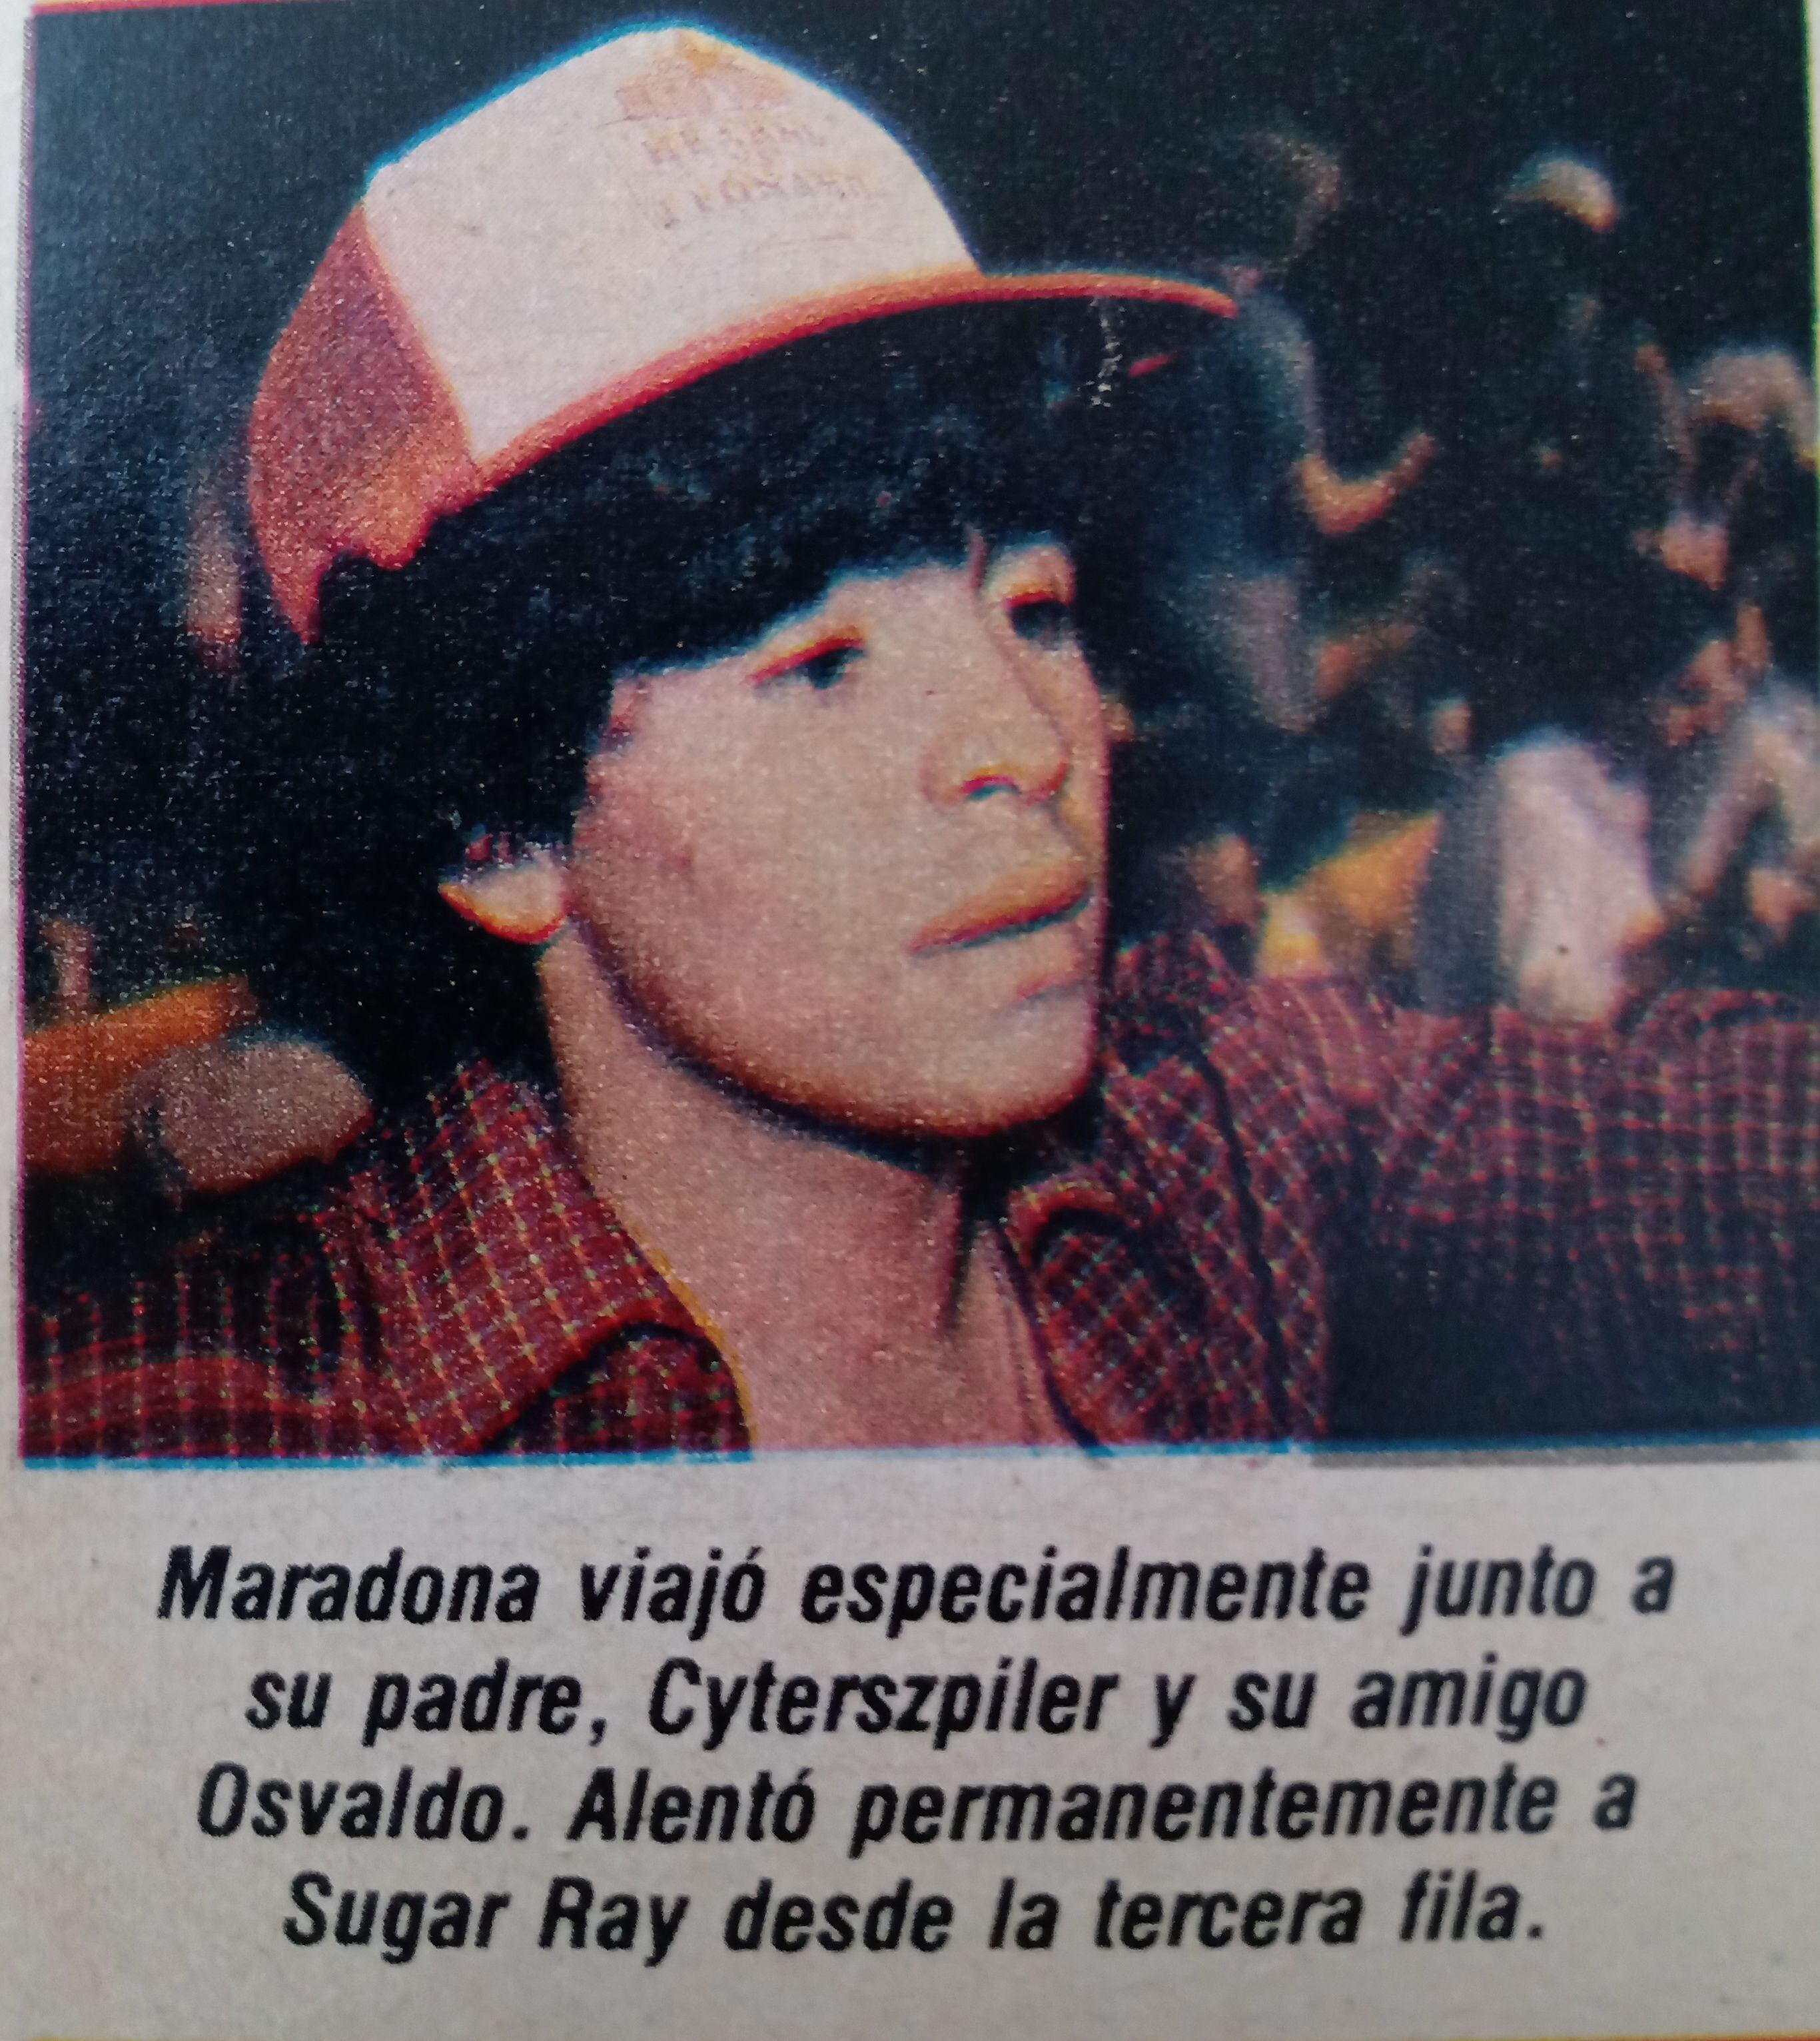 Maradona en la pelea Hearns-Leonard de 1981